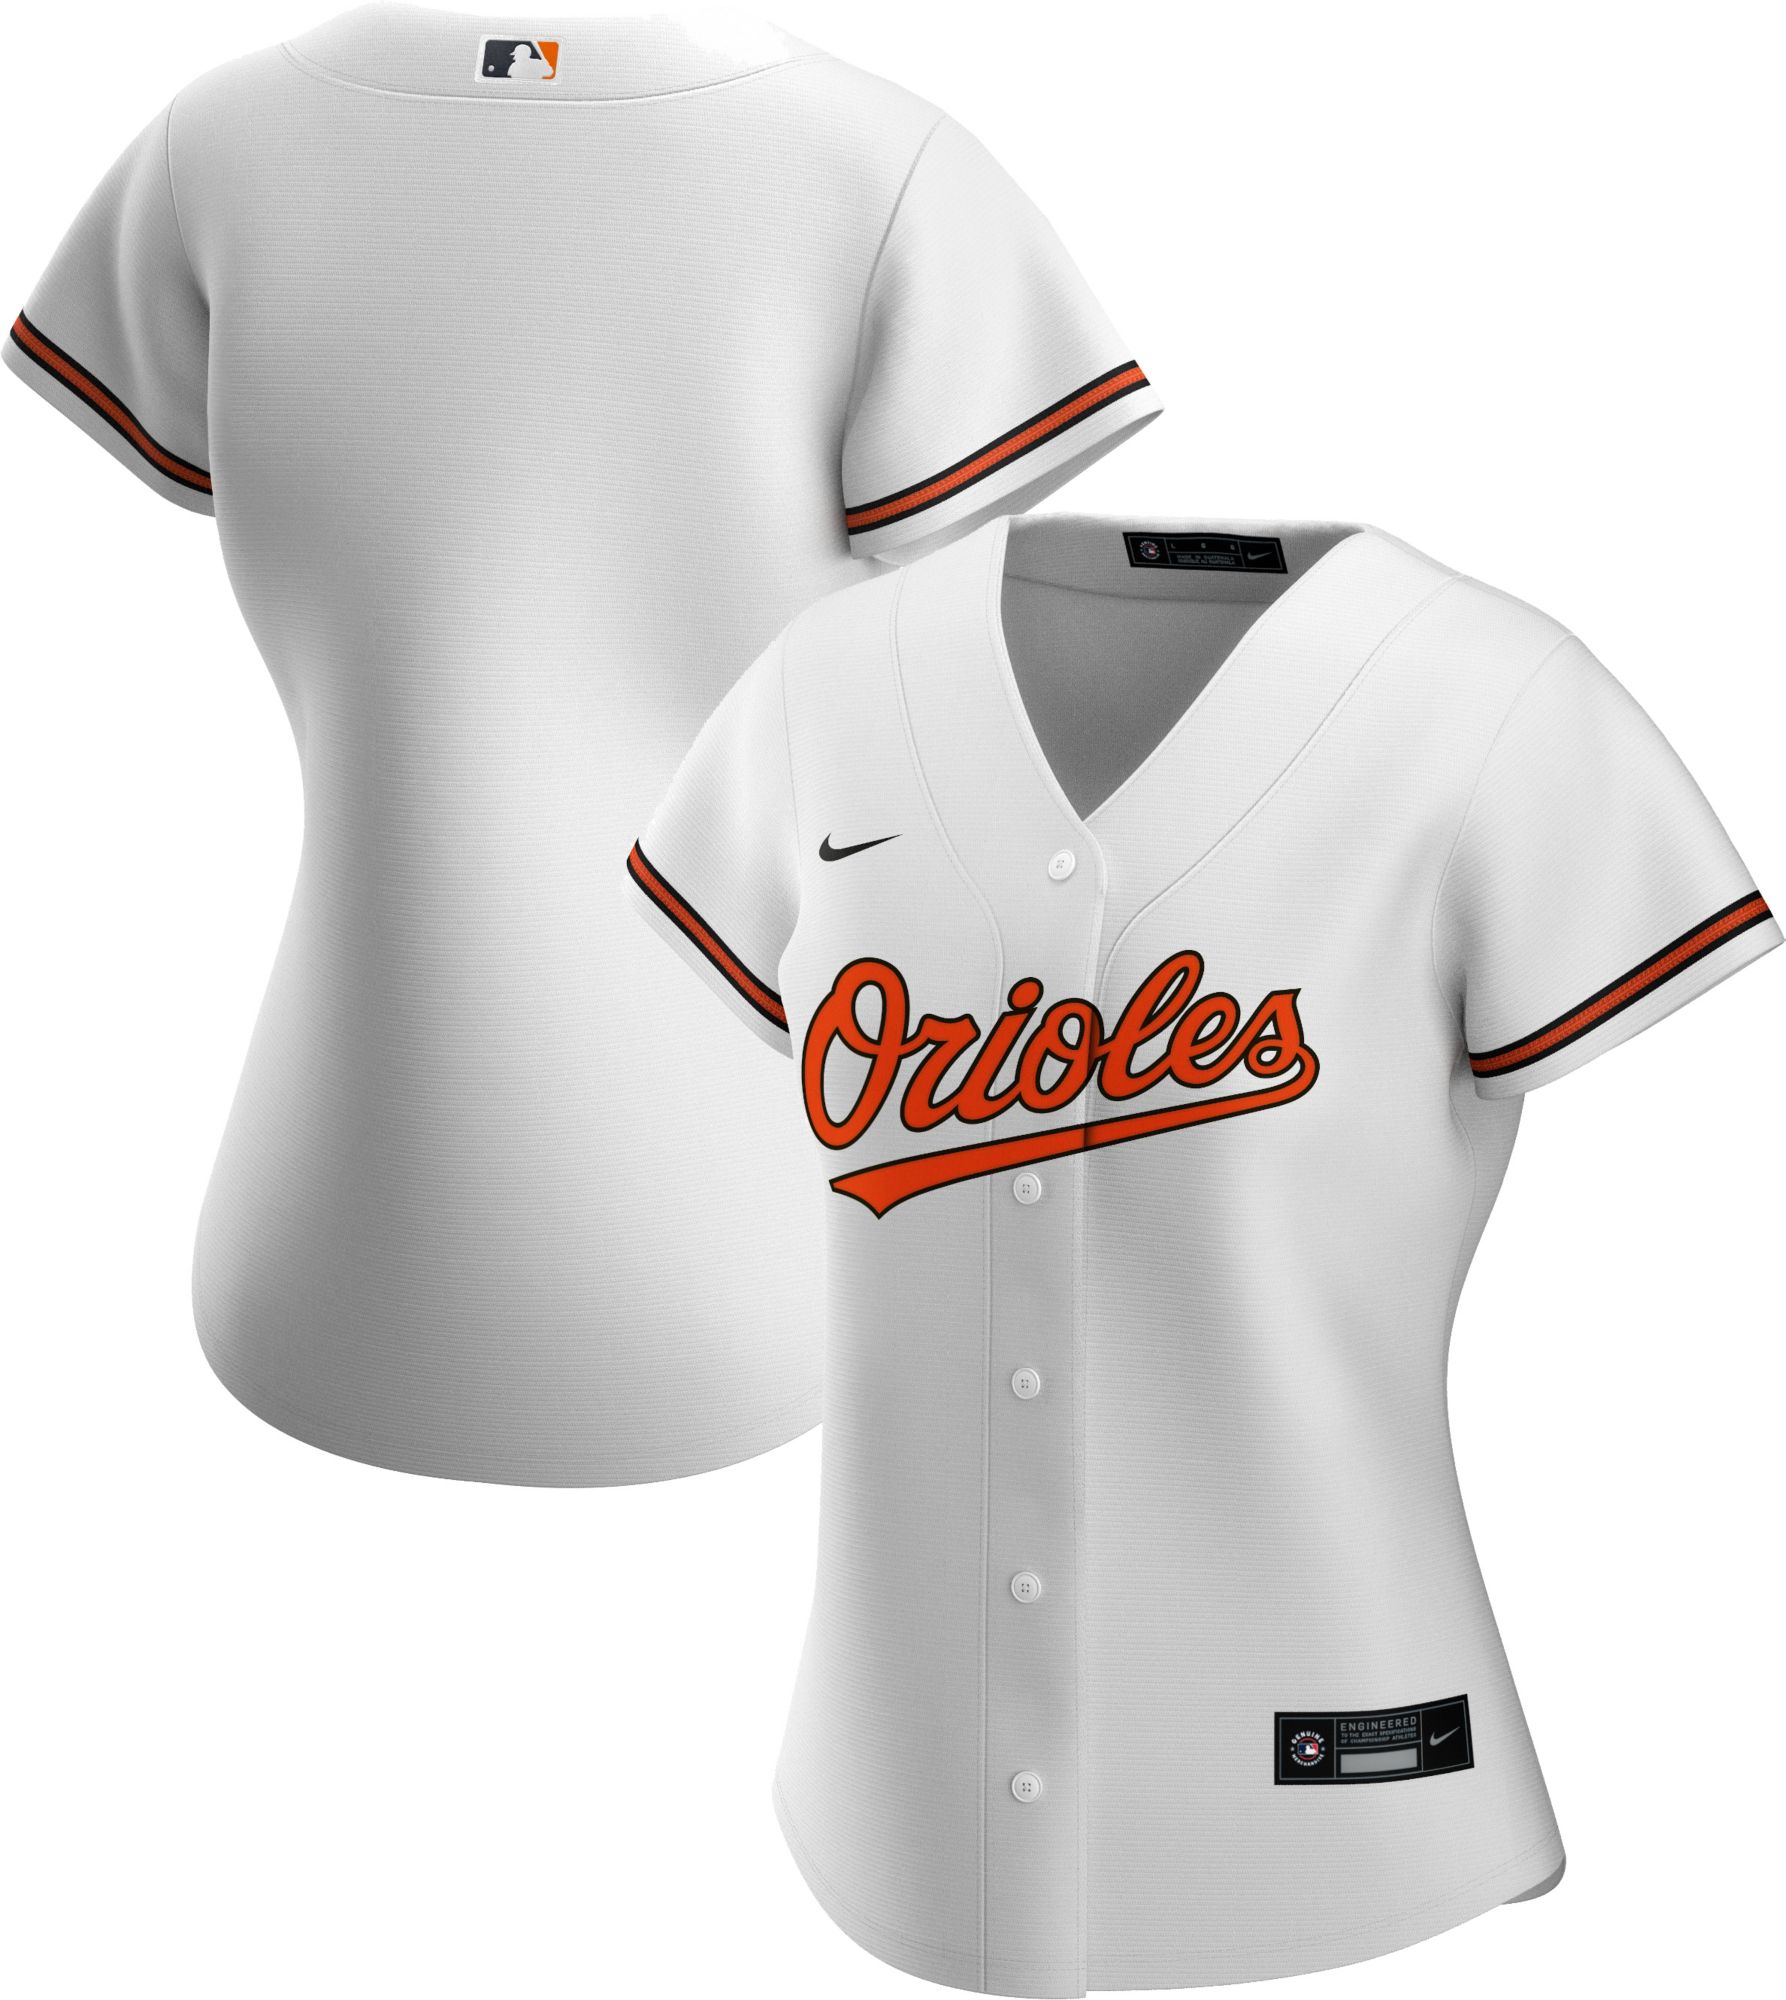 Nike / Women's Replica Baltimore Orioles Cool Base White Jersey